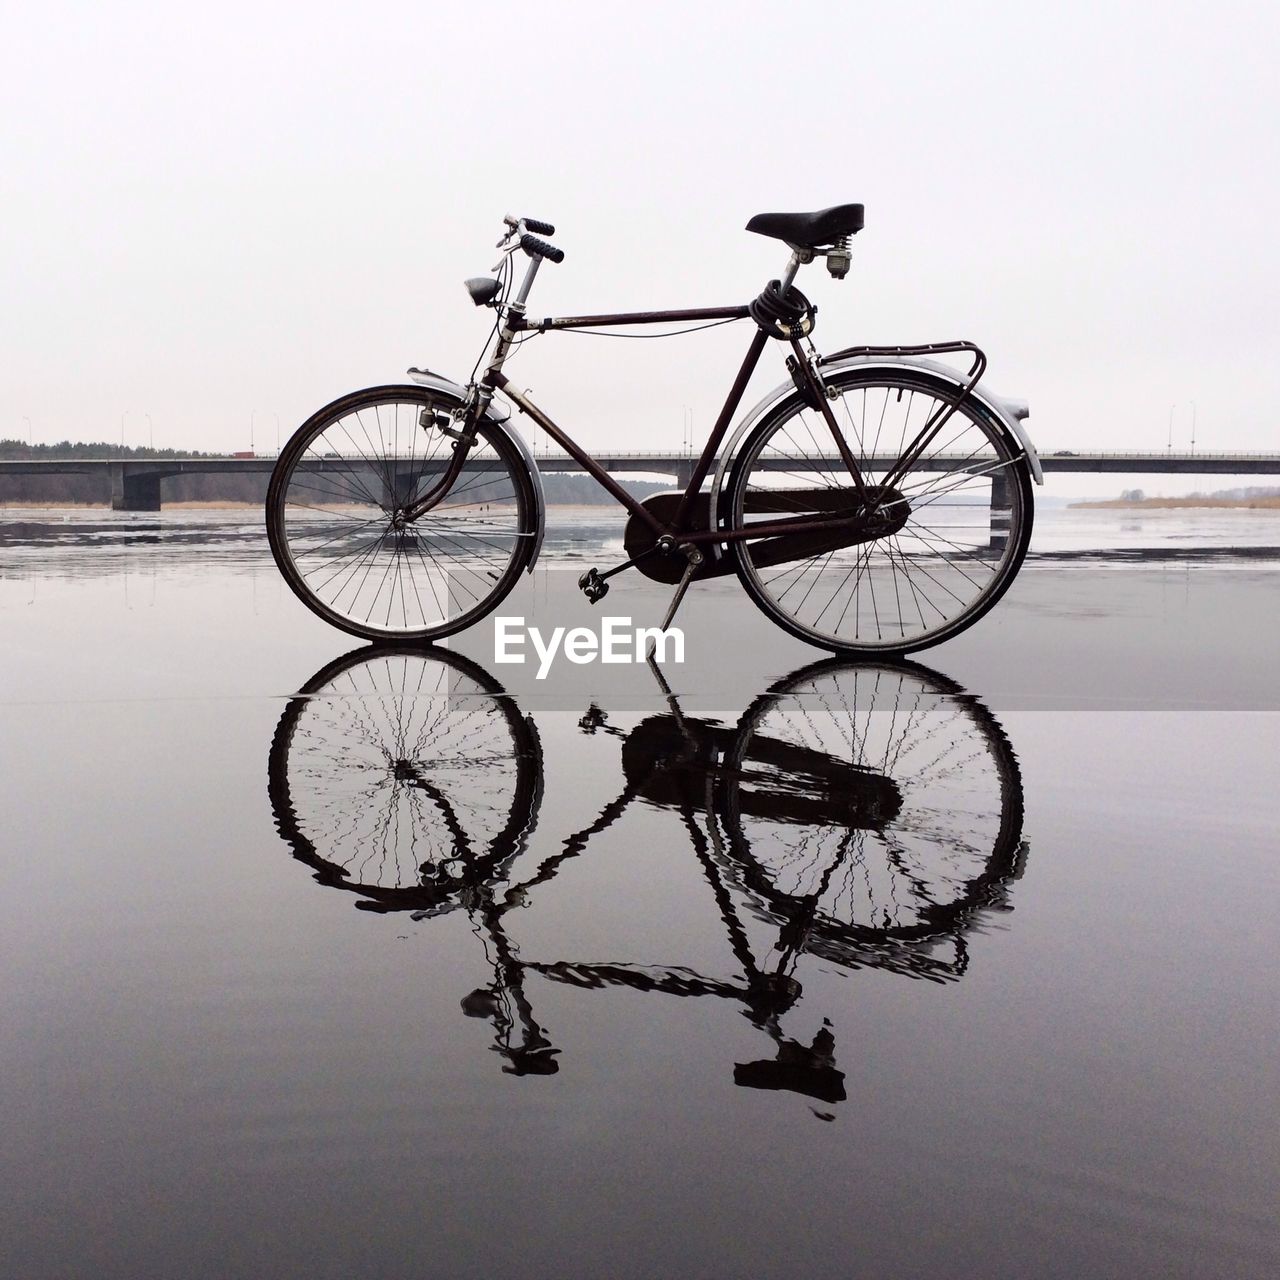 Bike reflected on water